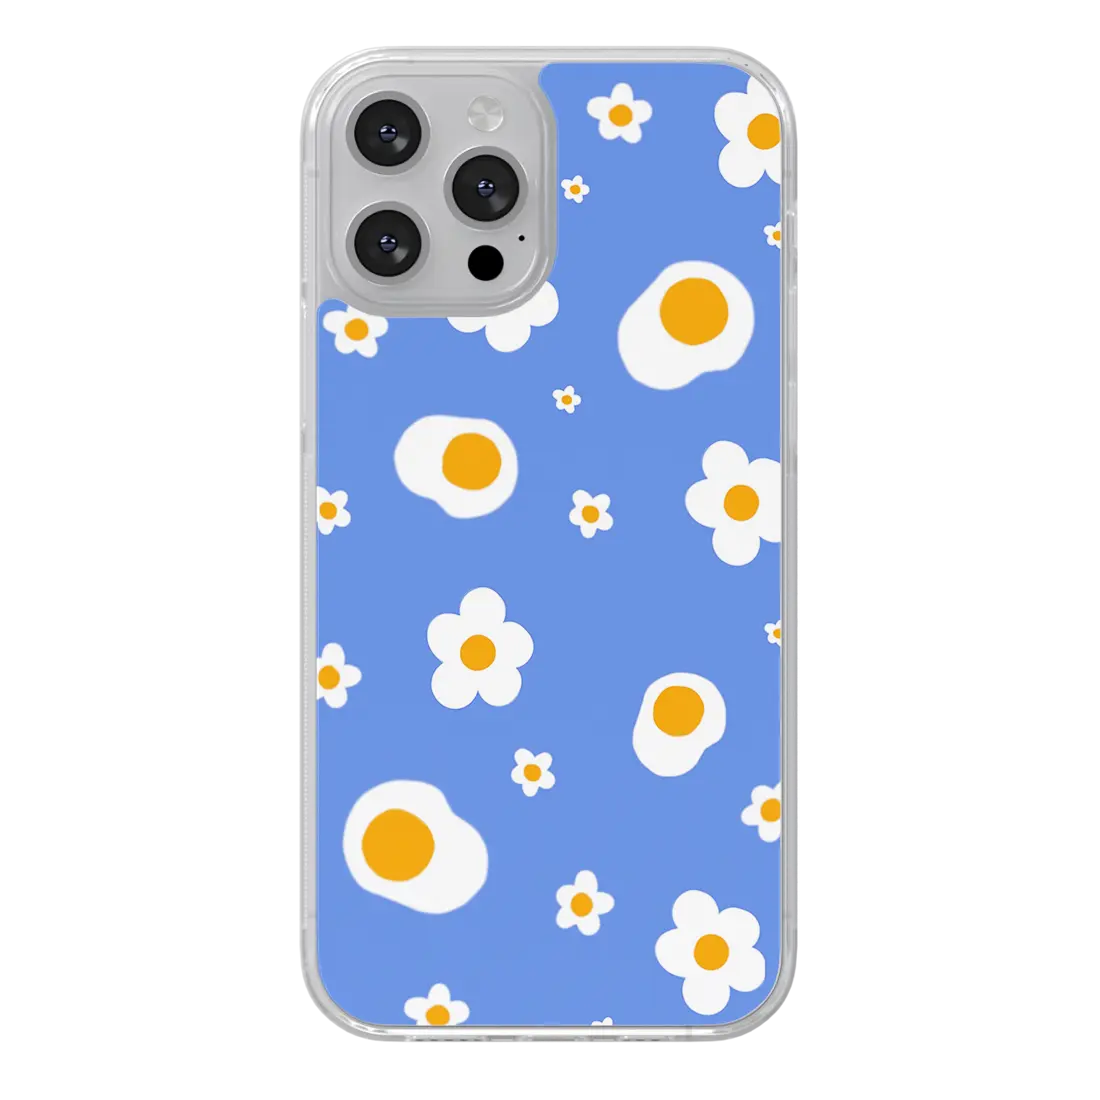 Flowers & Eggs - Tab Art